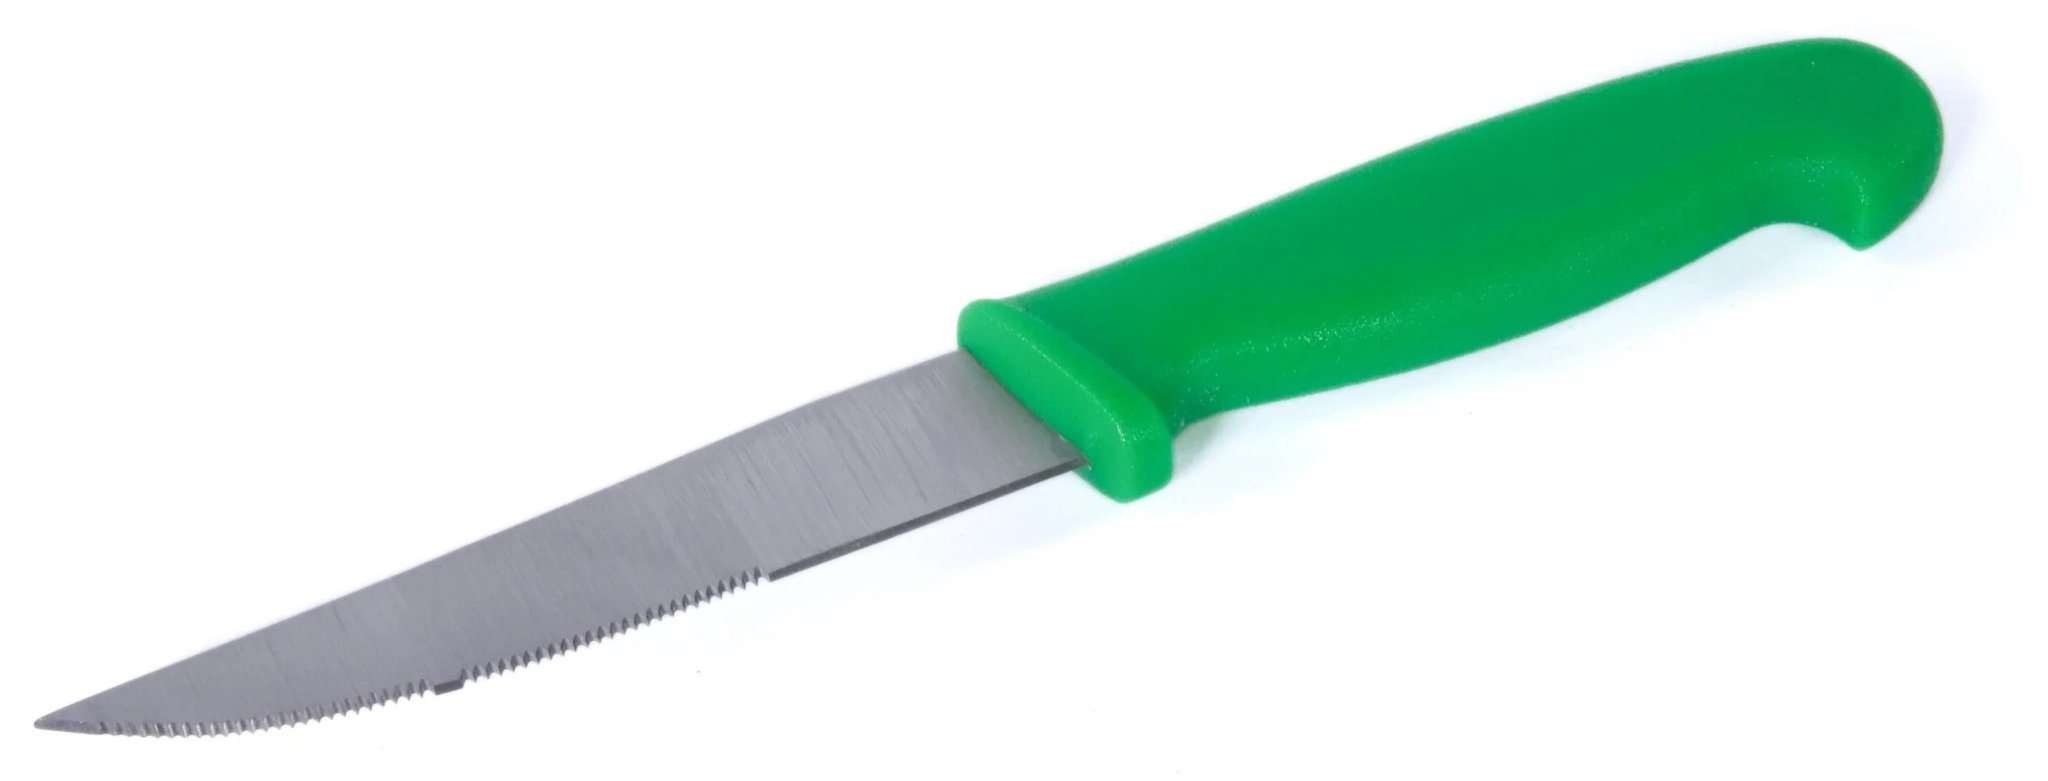 *Everyday Knives* Serrated Veg Knife, Green, 100mm